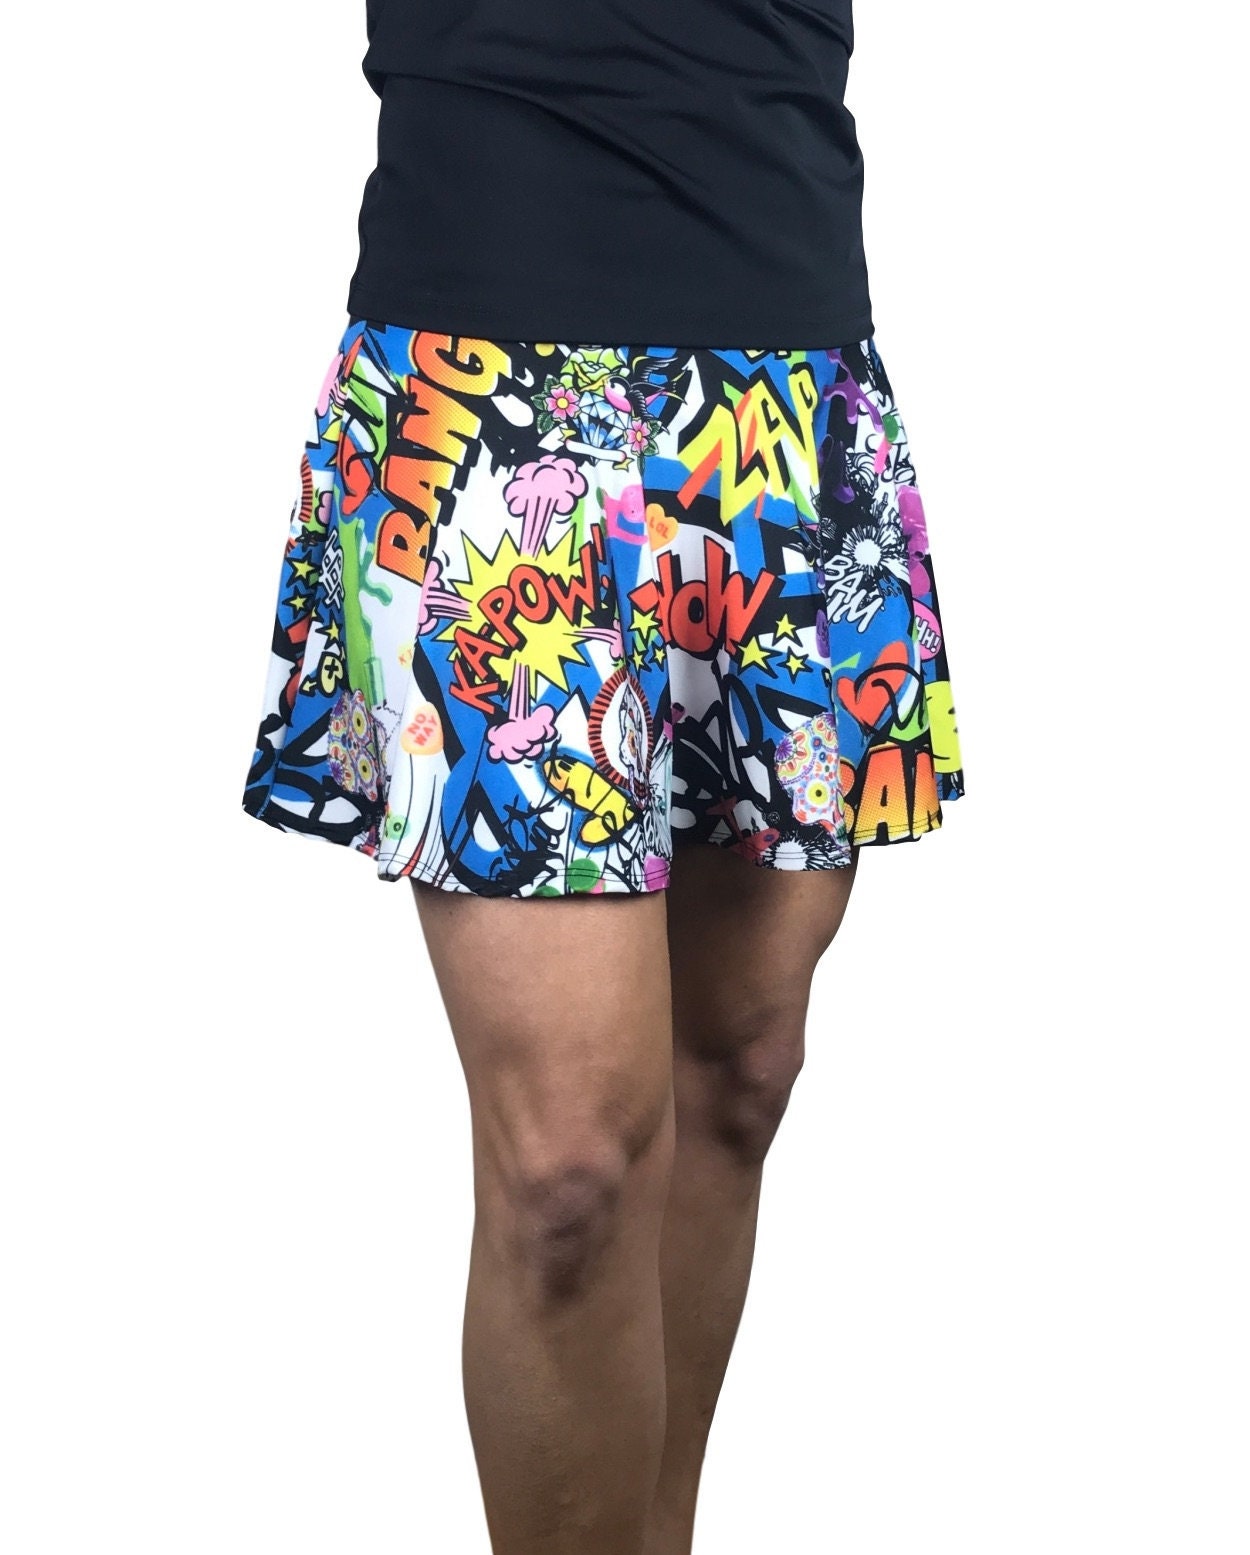 Graffiti Print Athletic Skirt W/ Built in Shorts and Pockets - Etsy